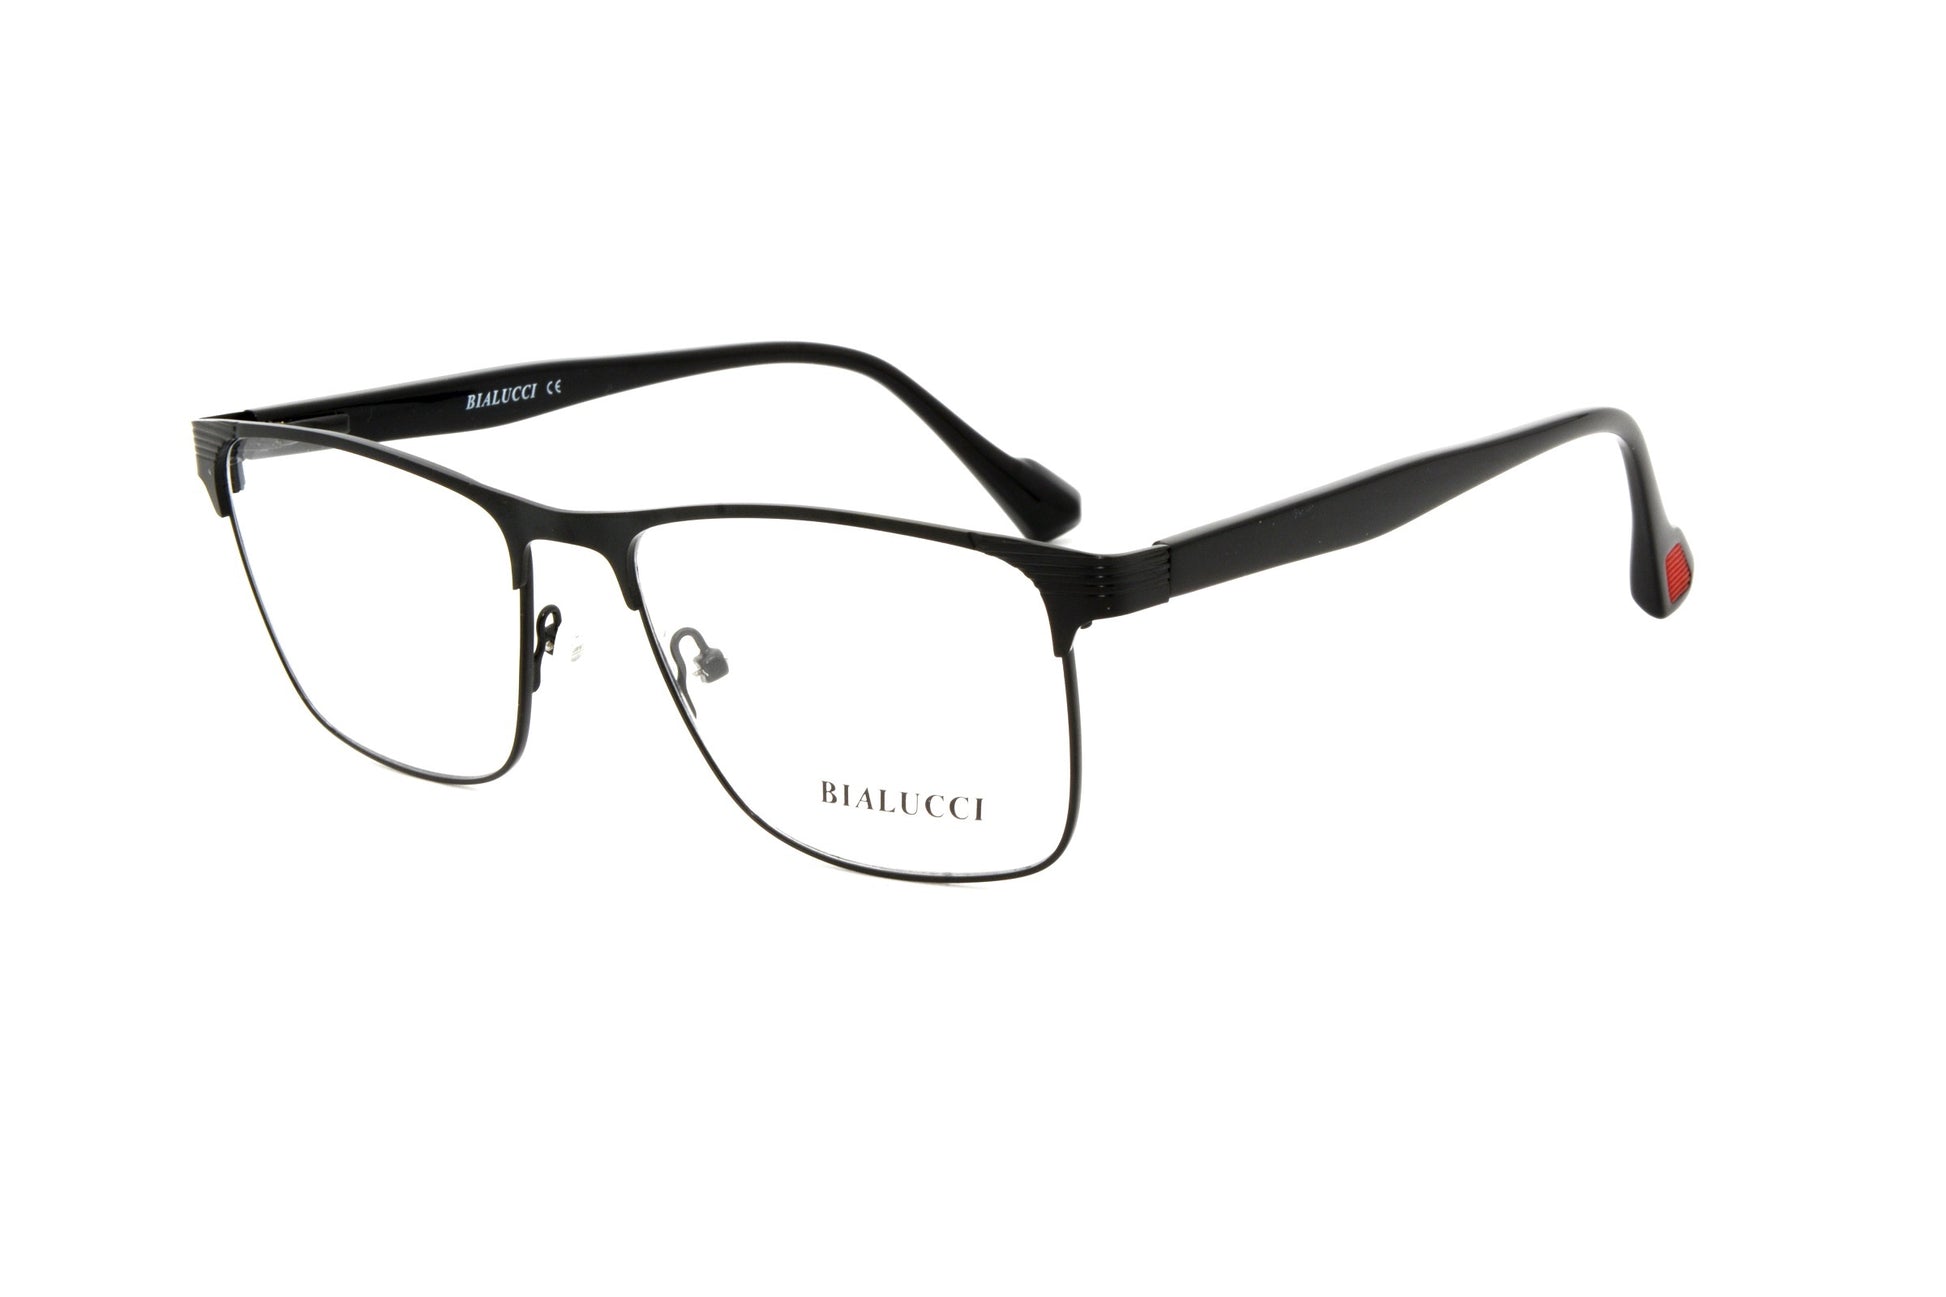 Bialucci eyewear XTK 61018 C1